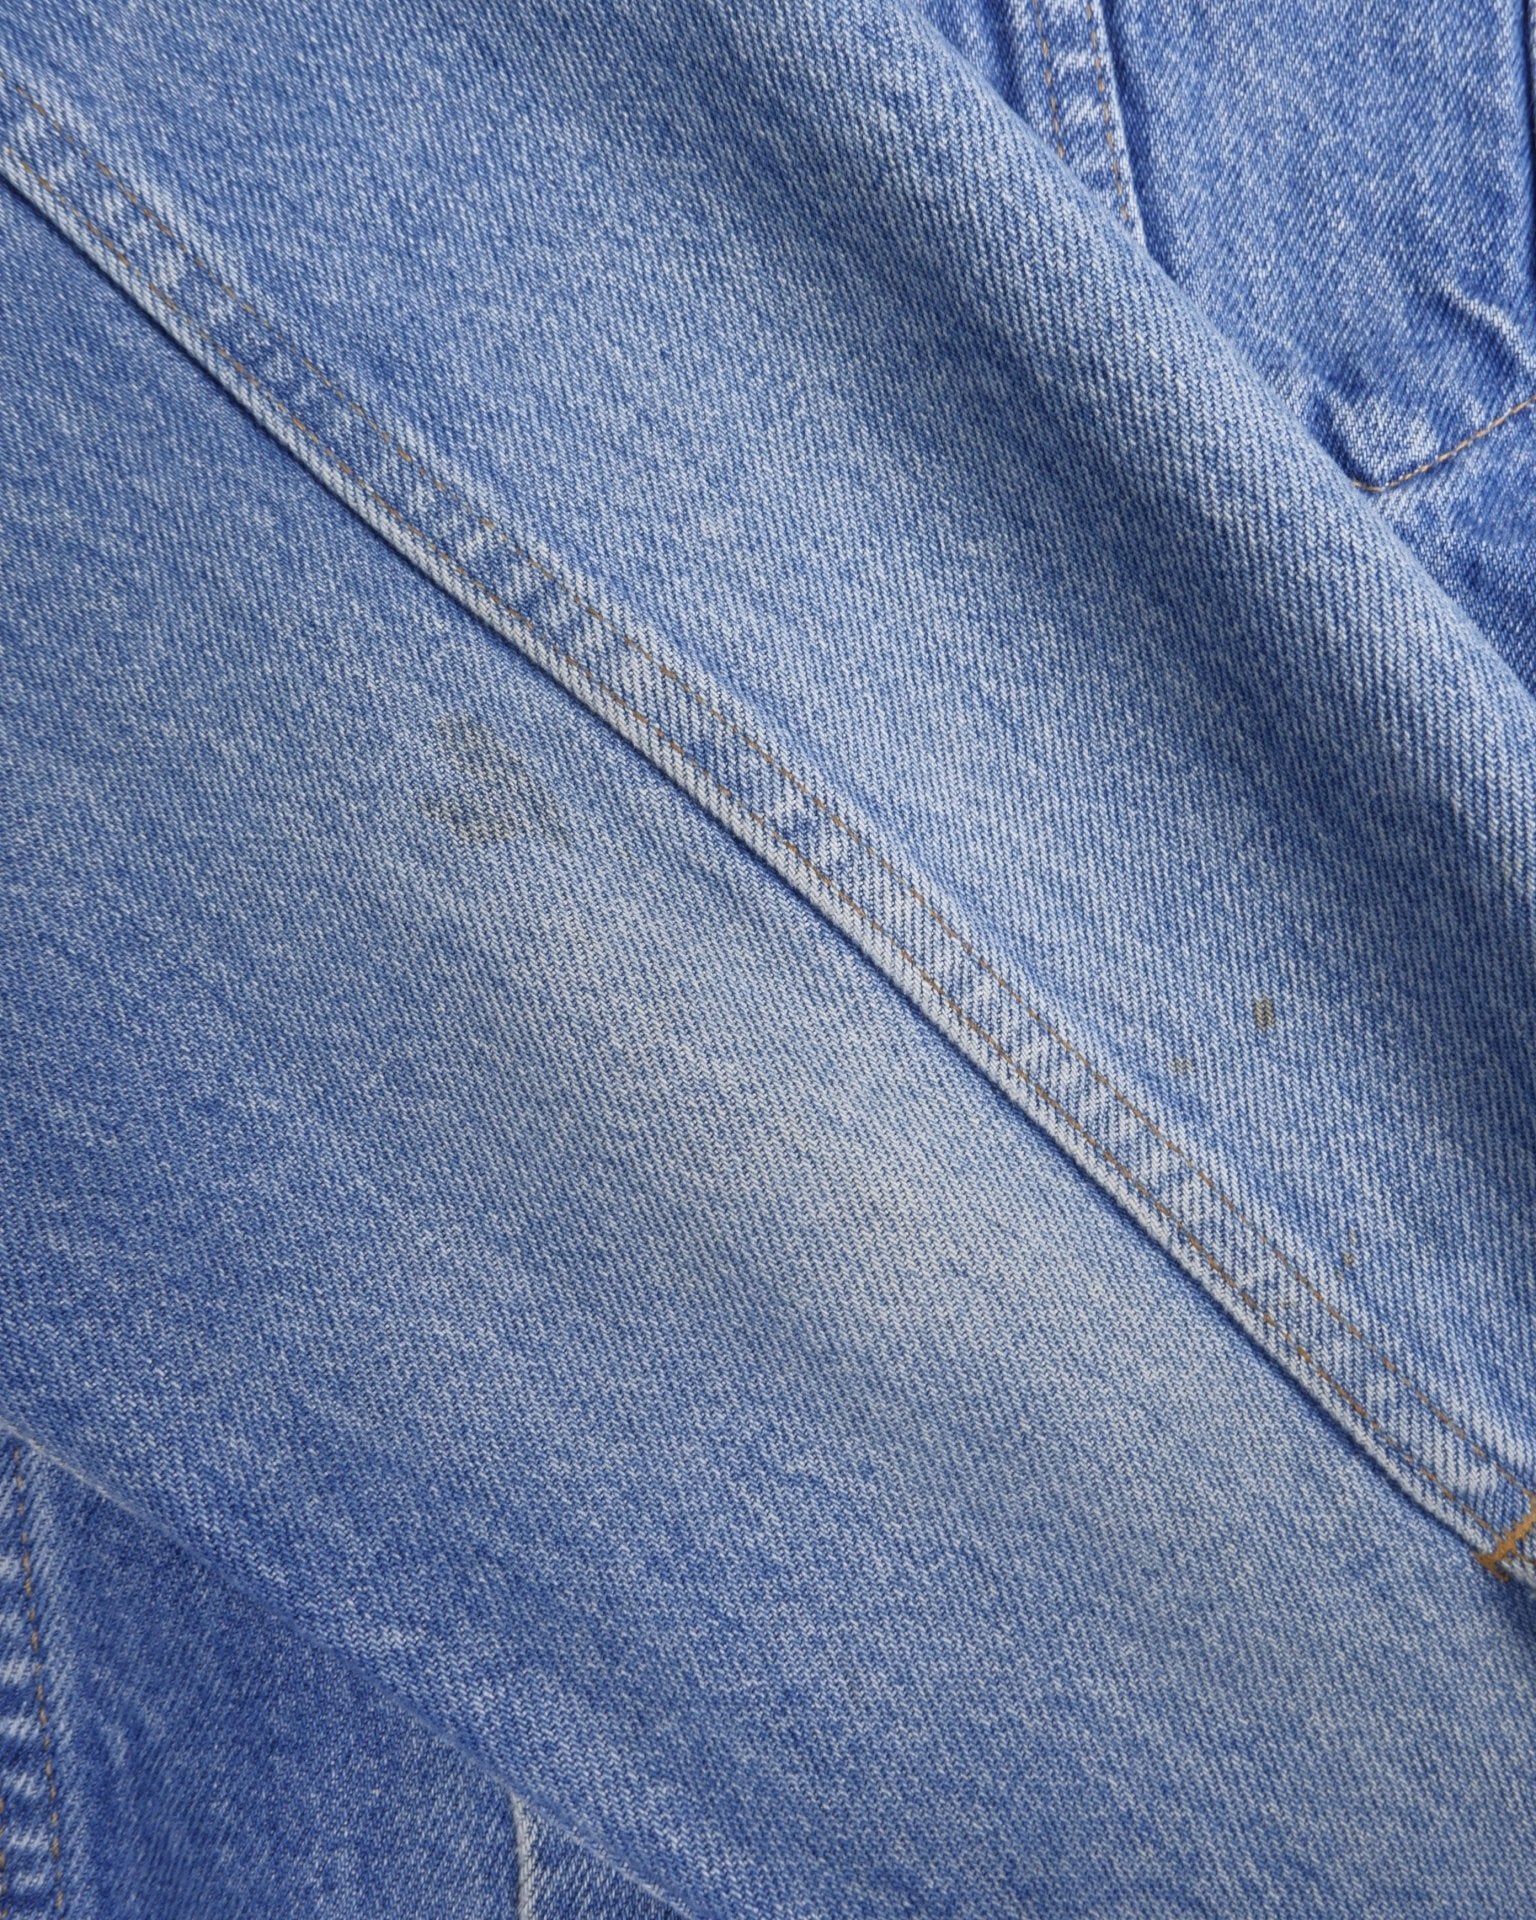 Levis embroidered Patch blue Denim Jacket - Peeces